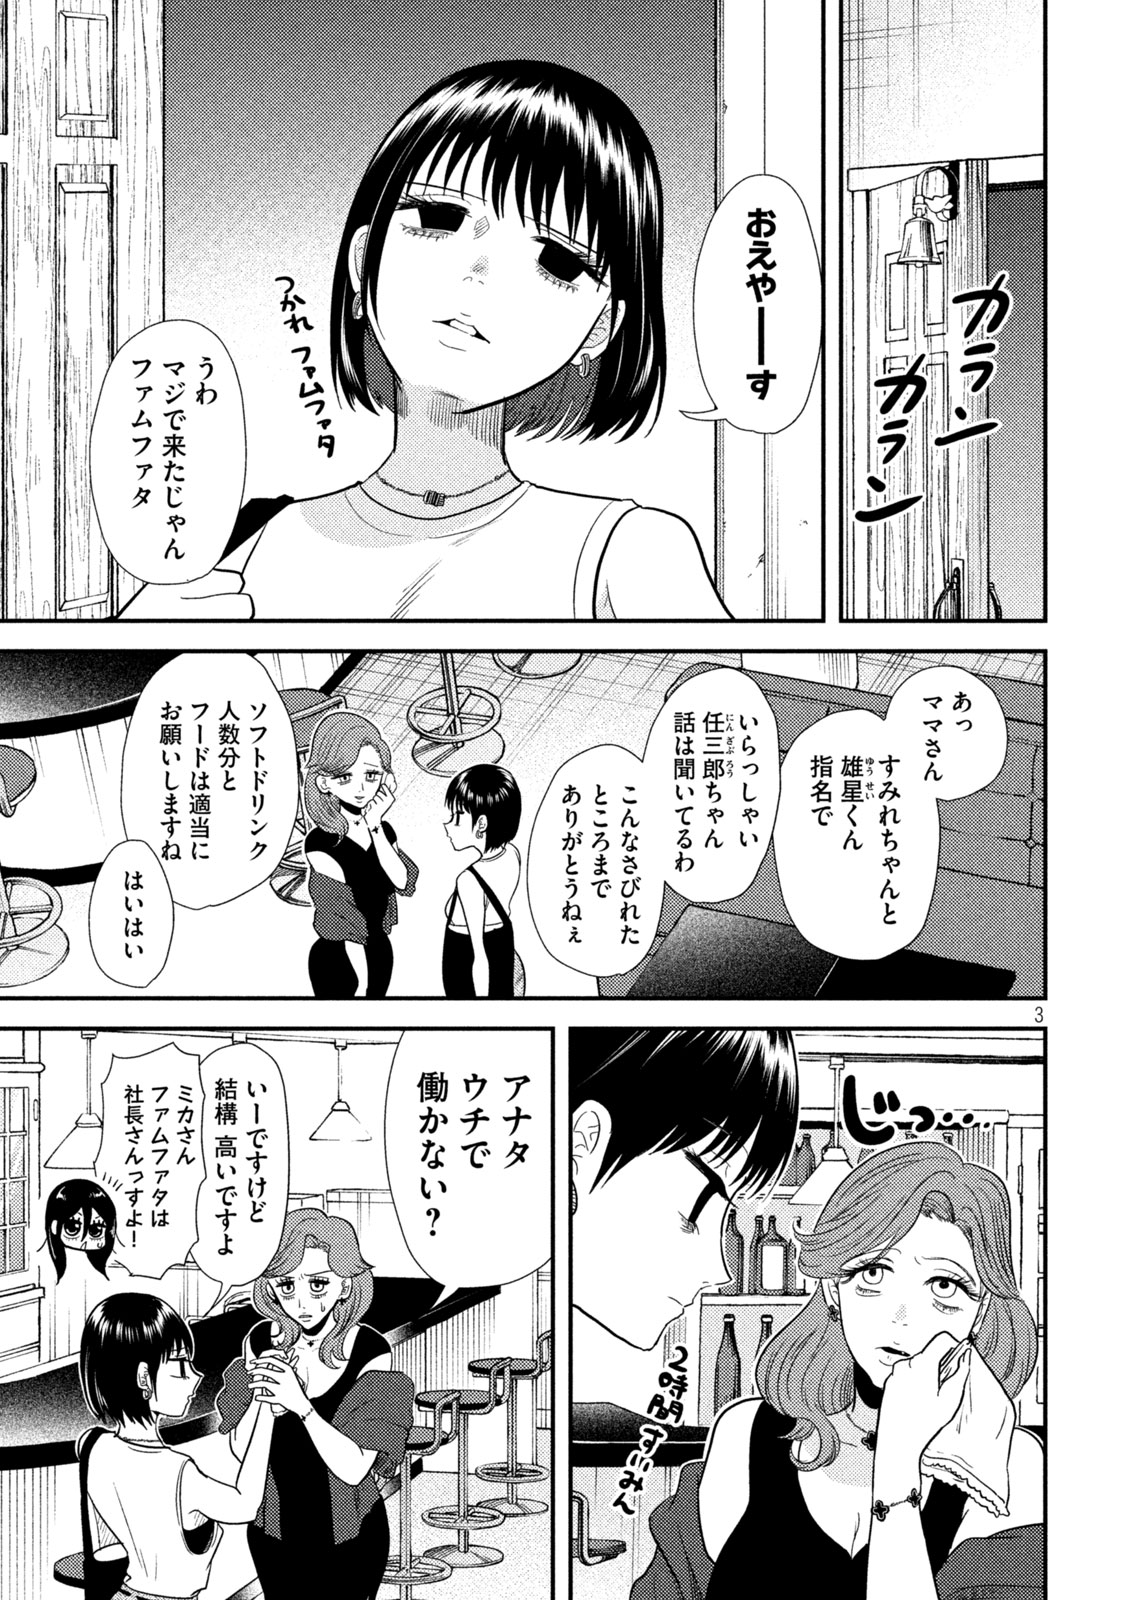 Heisei Haizanhei Sumire-chan - Chapter 7 - Page 3